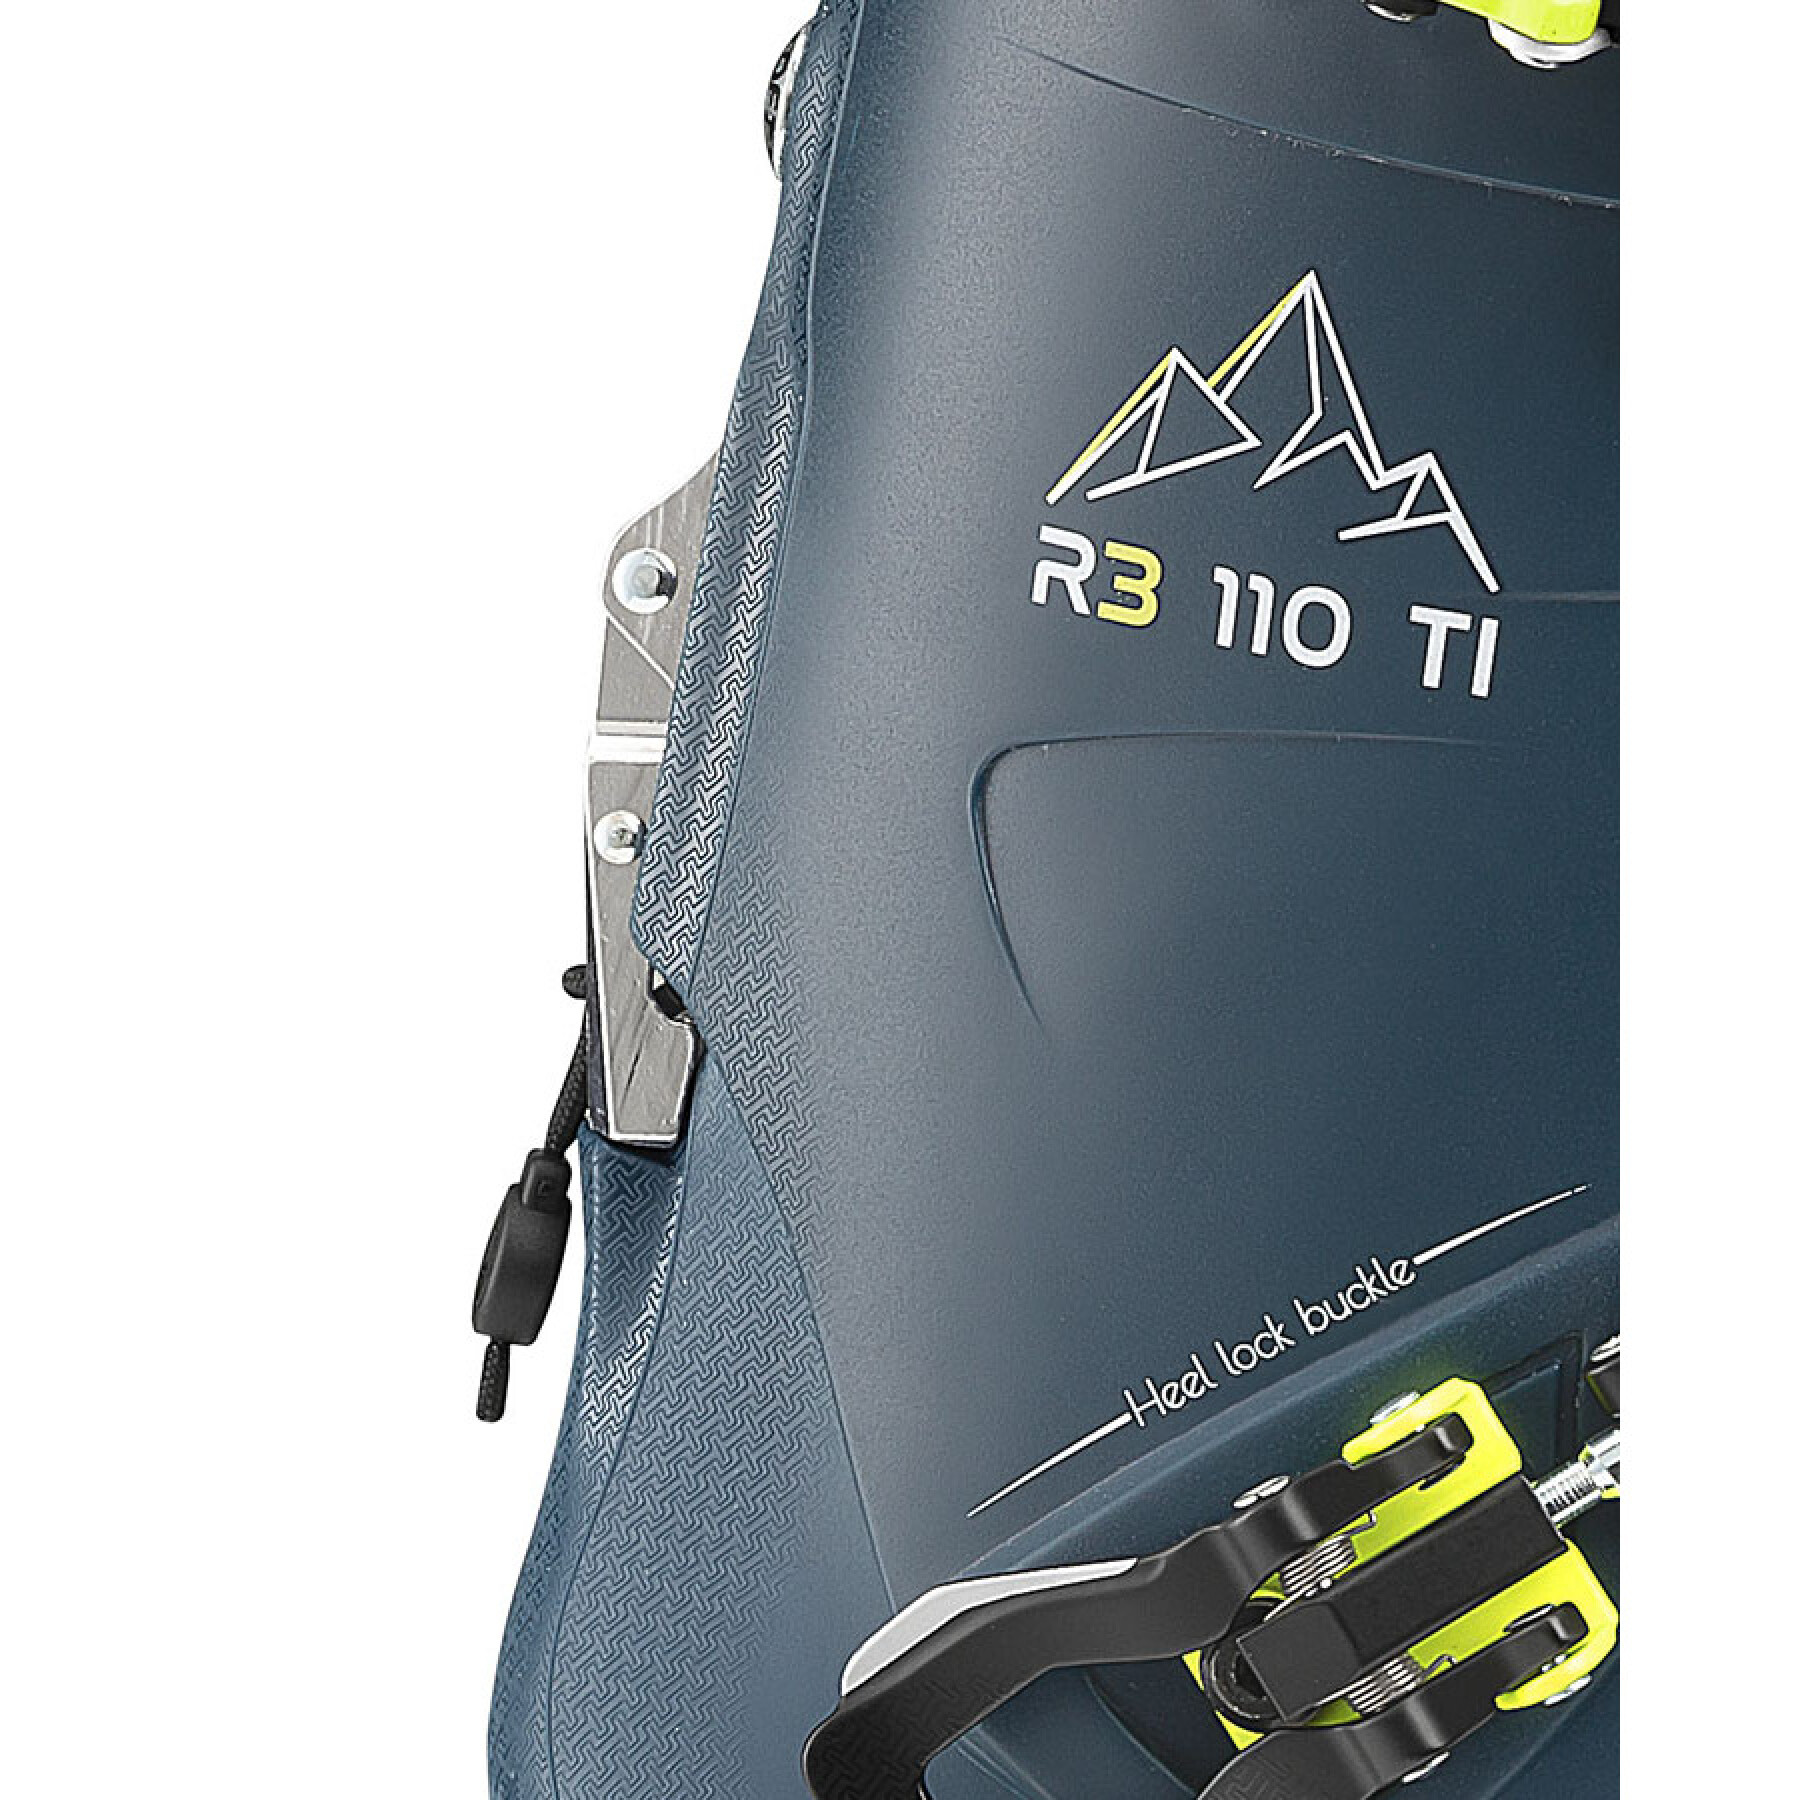 Ski boots Roxa R3 110 TI IR